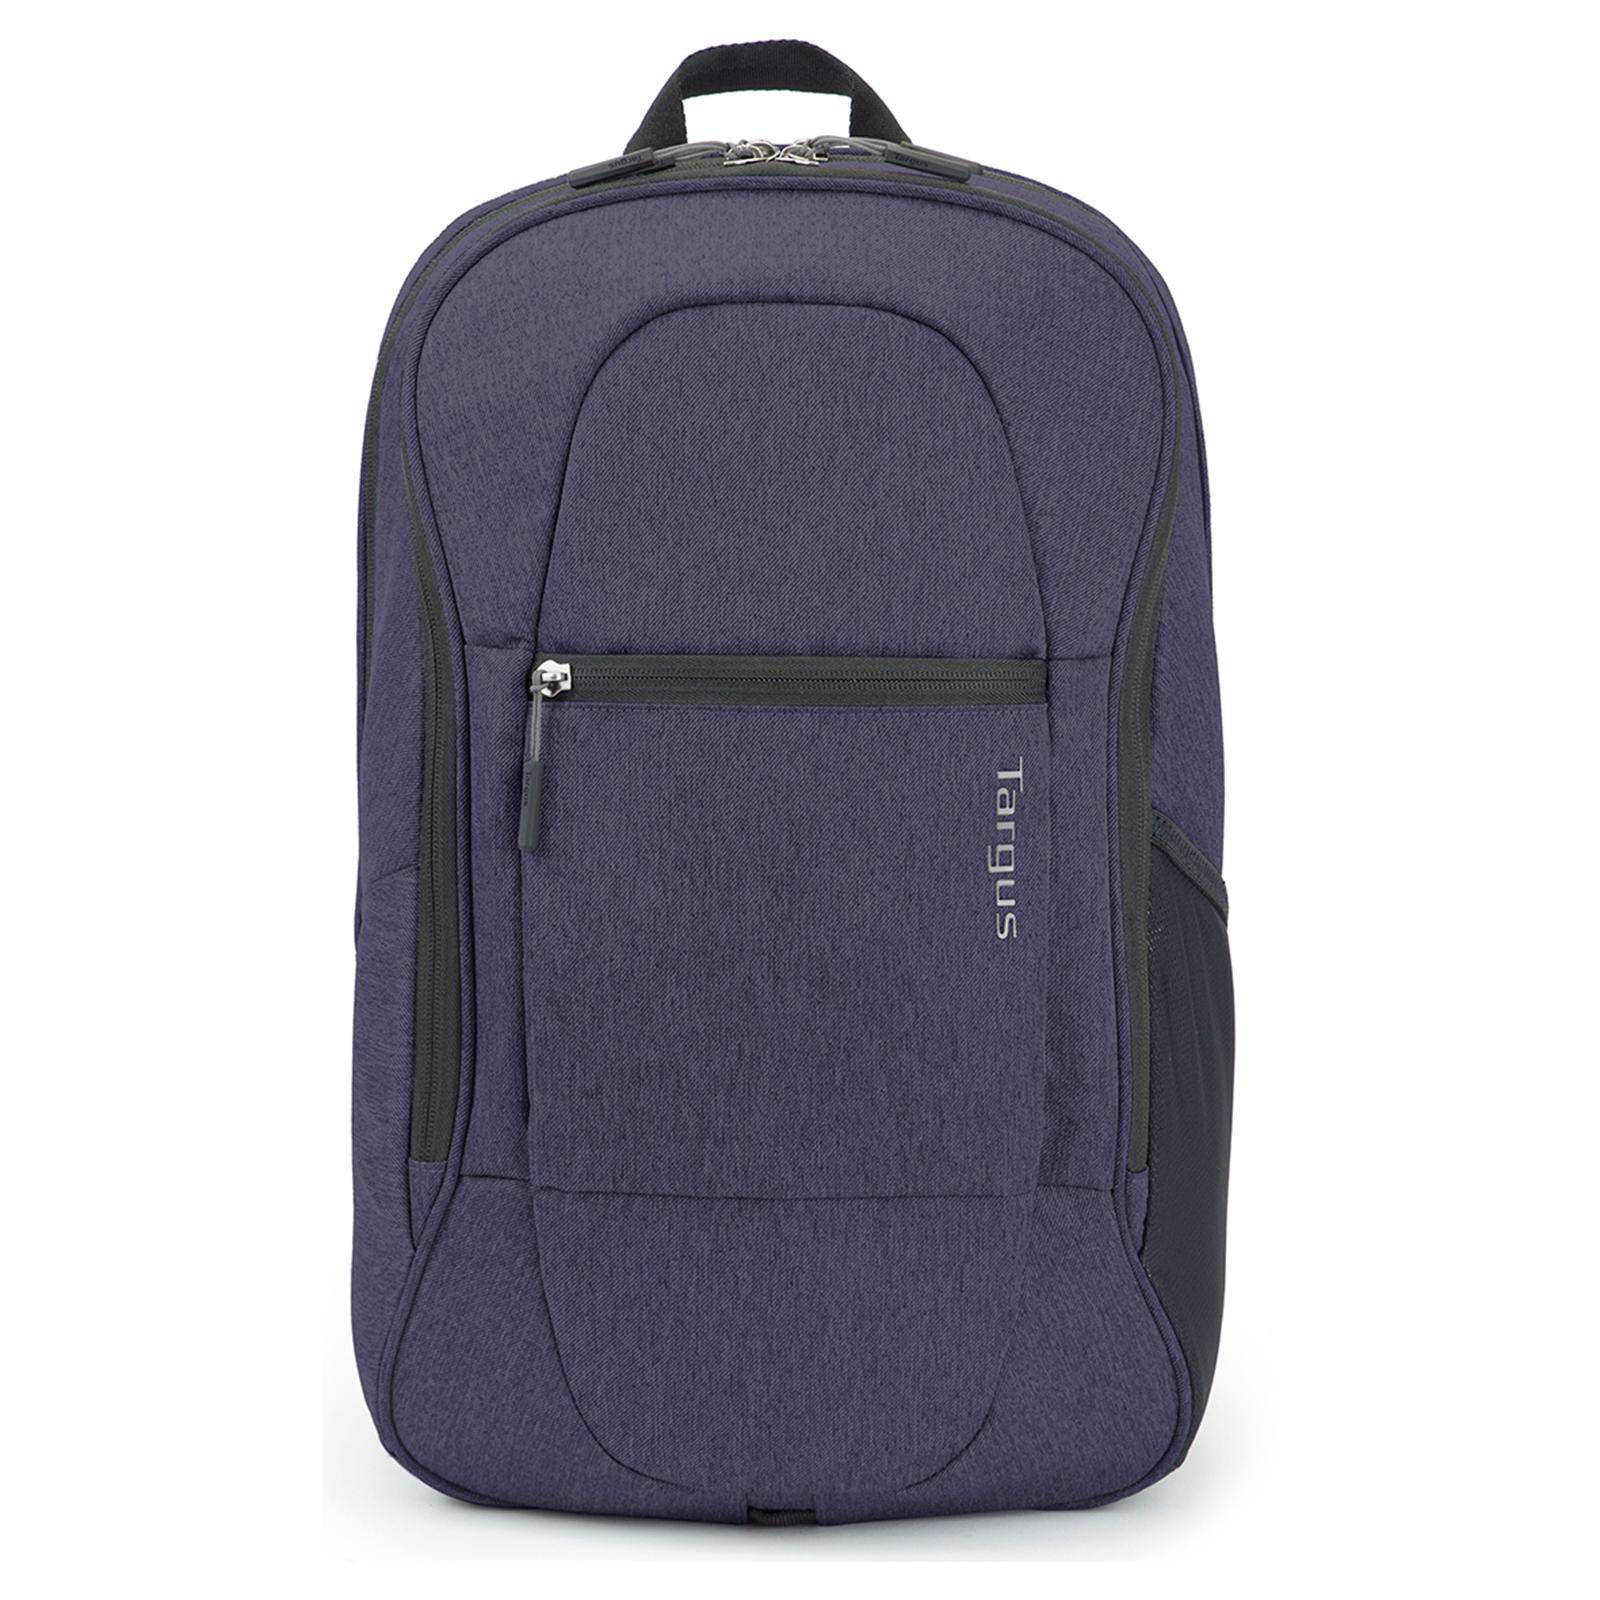 Targus Commuter 15.6inch Laptop Backpack online kopen